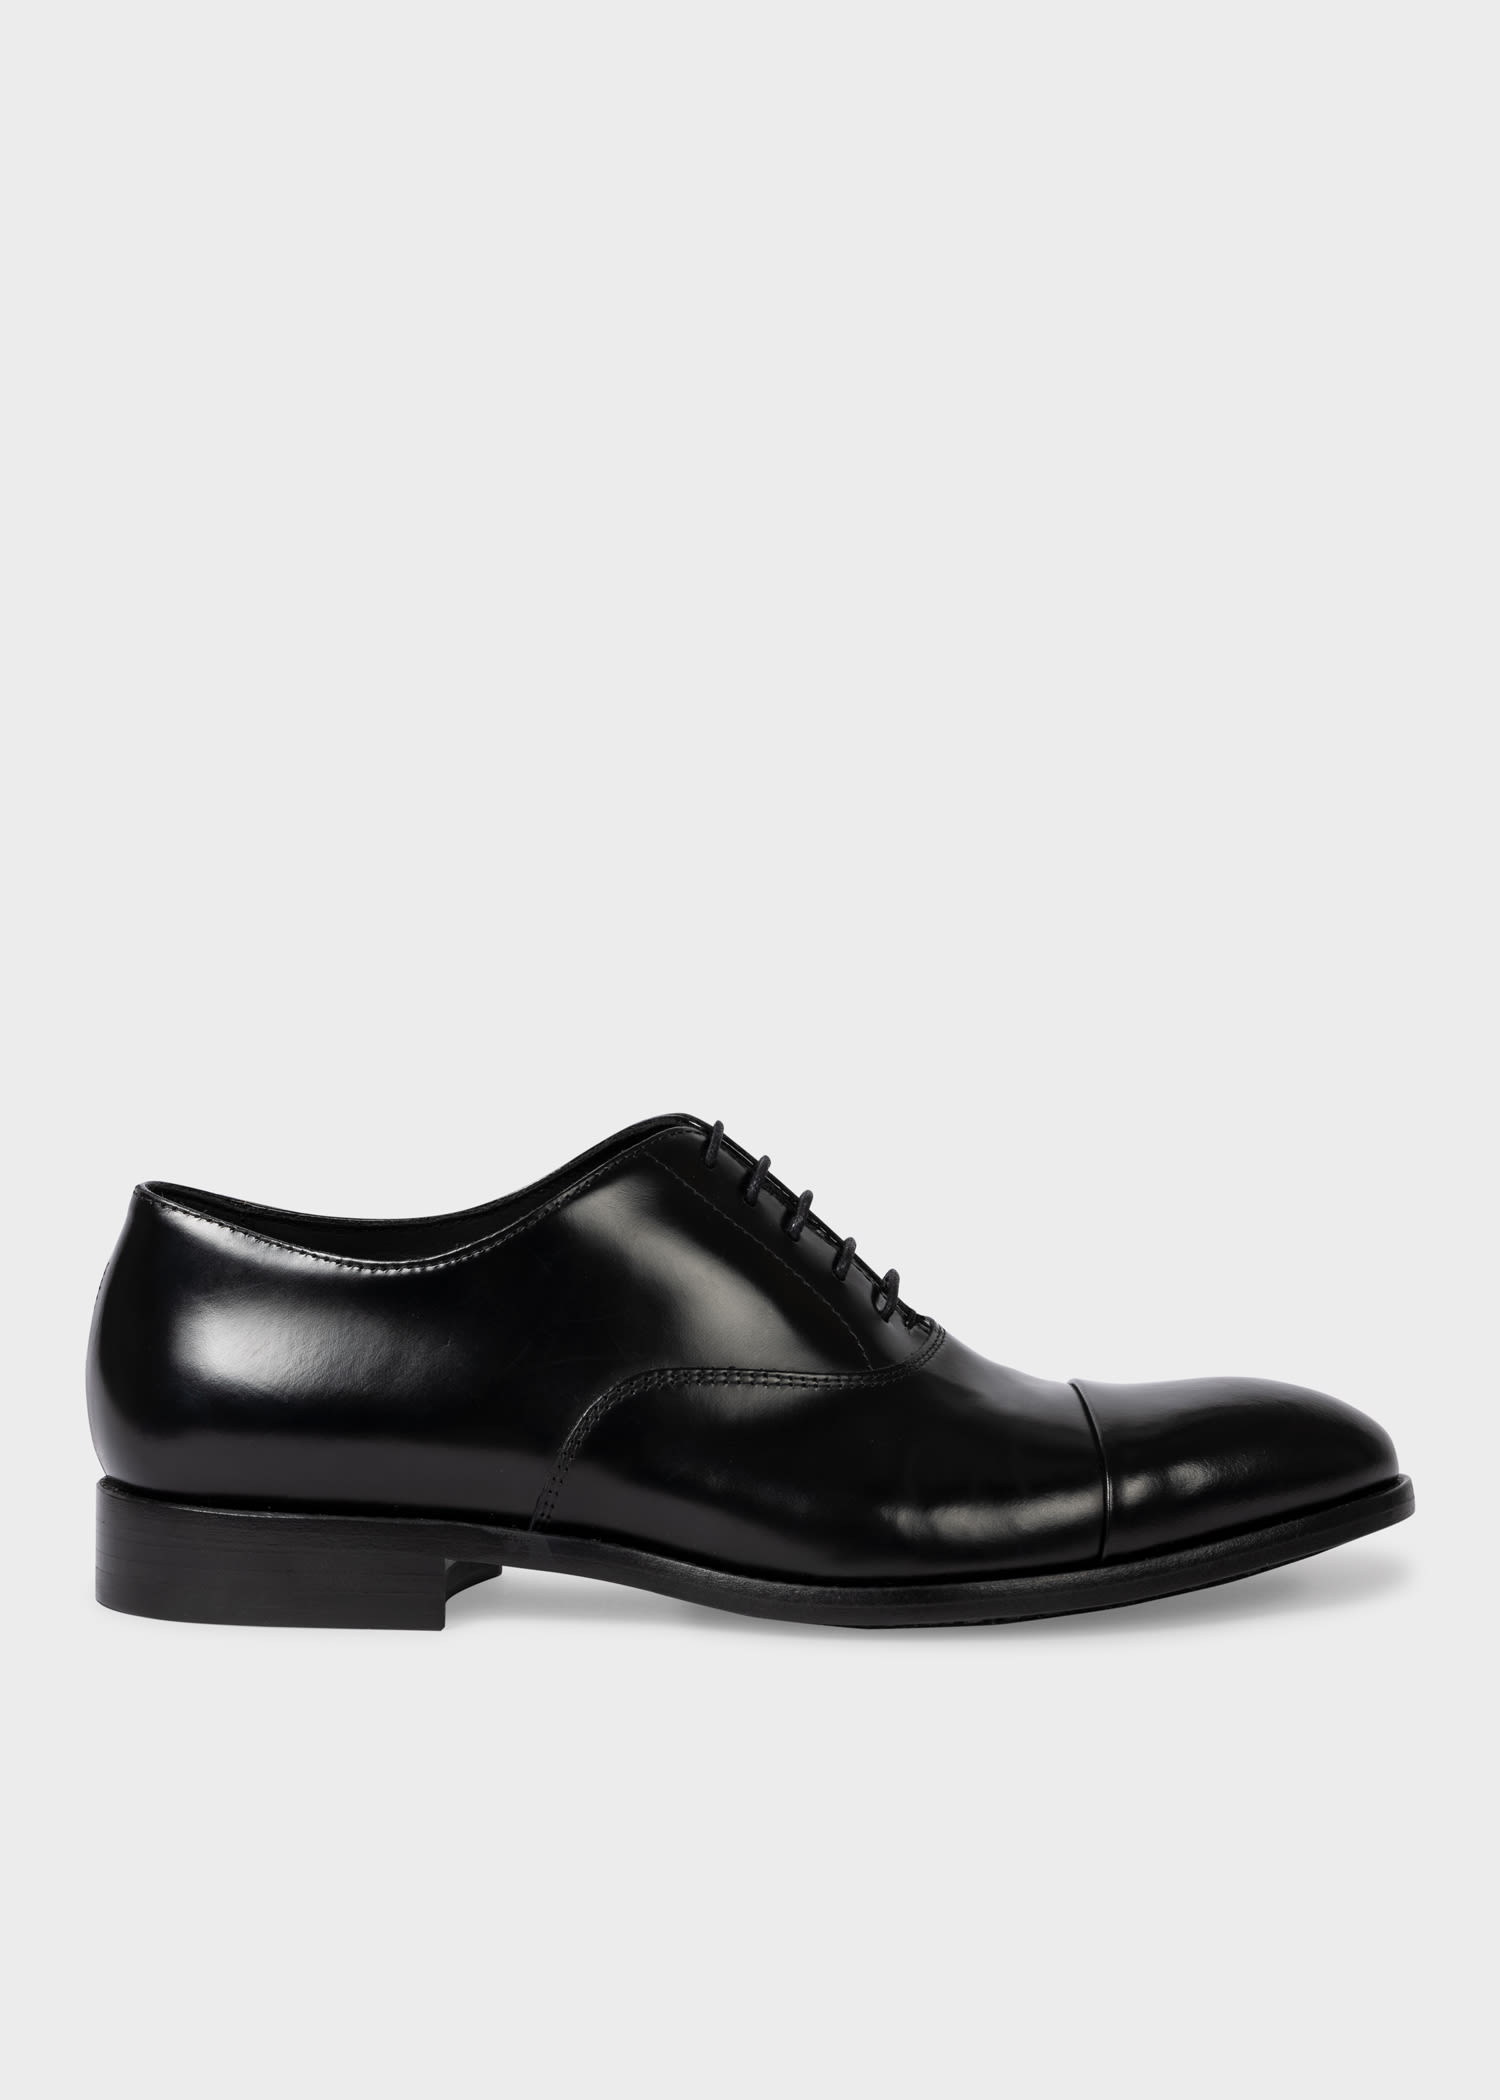 Men's Black High-Shine Leather 'Brent' Shoes